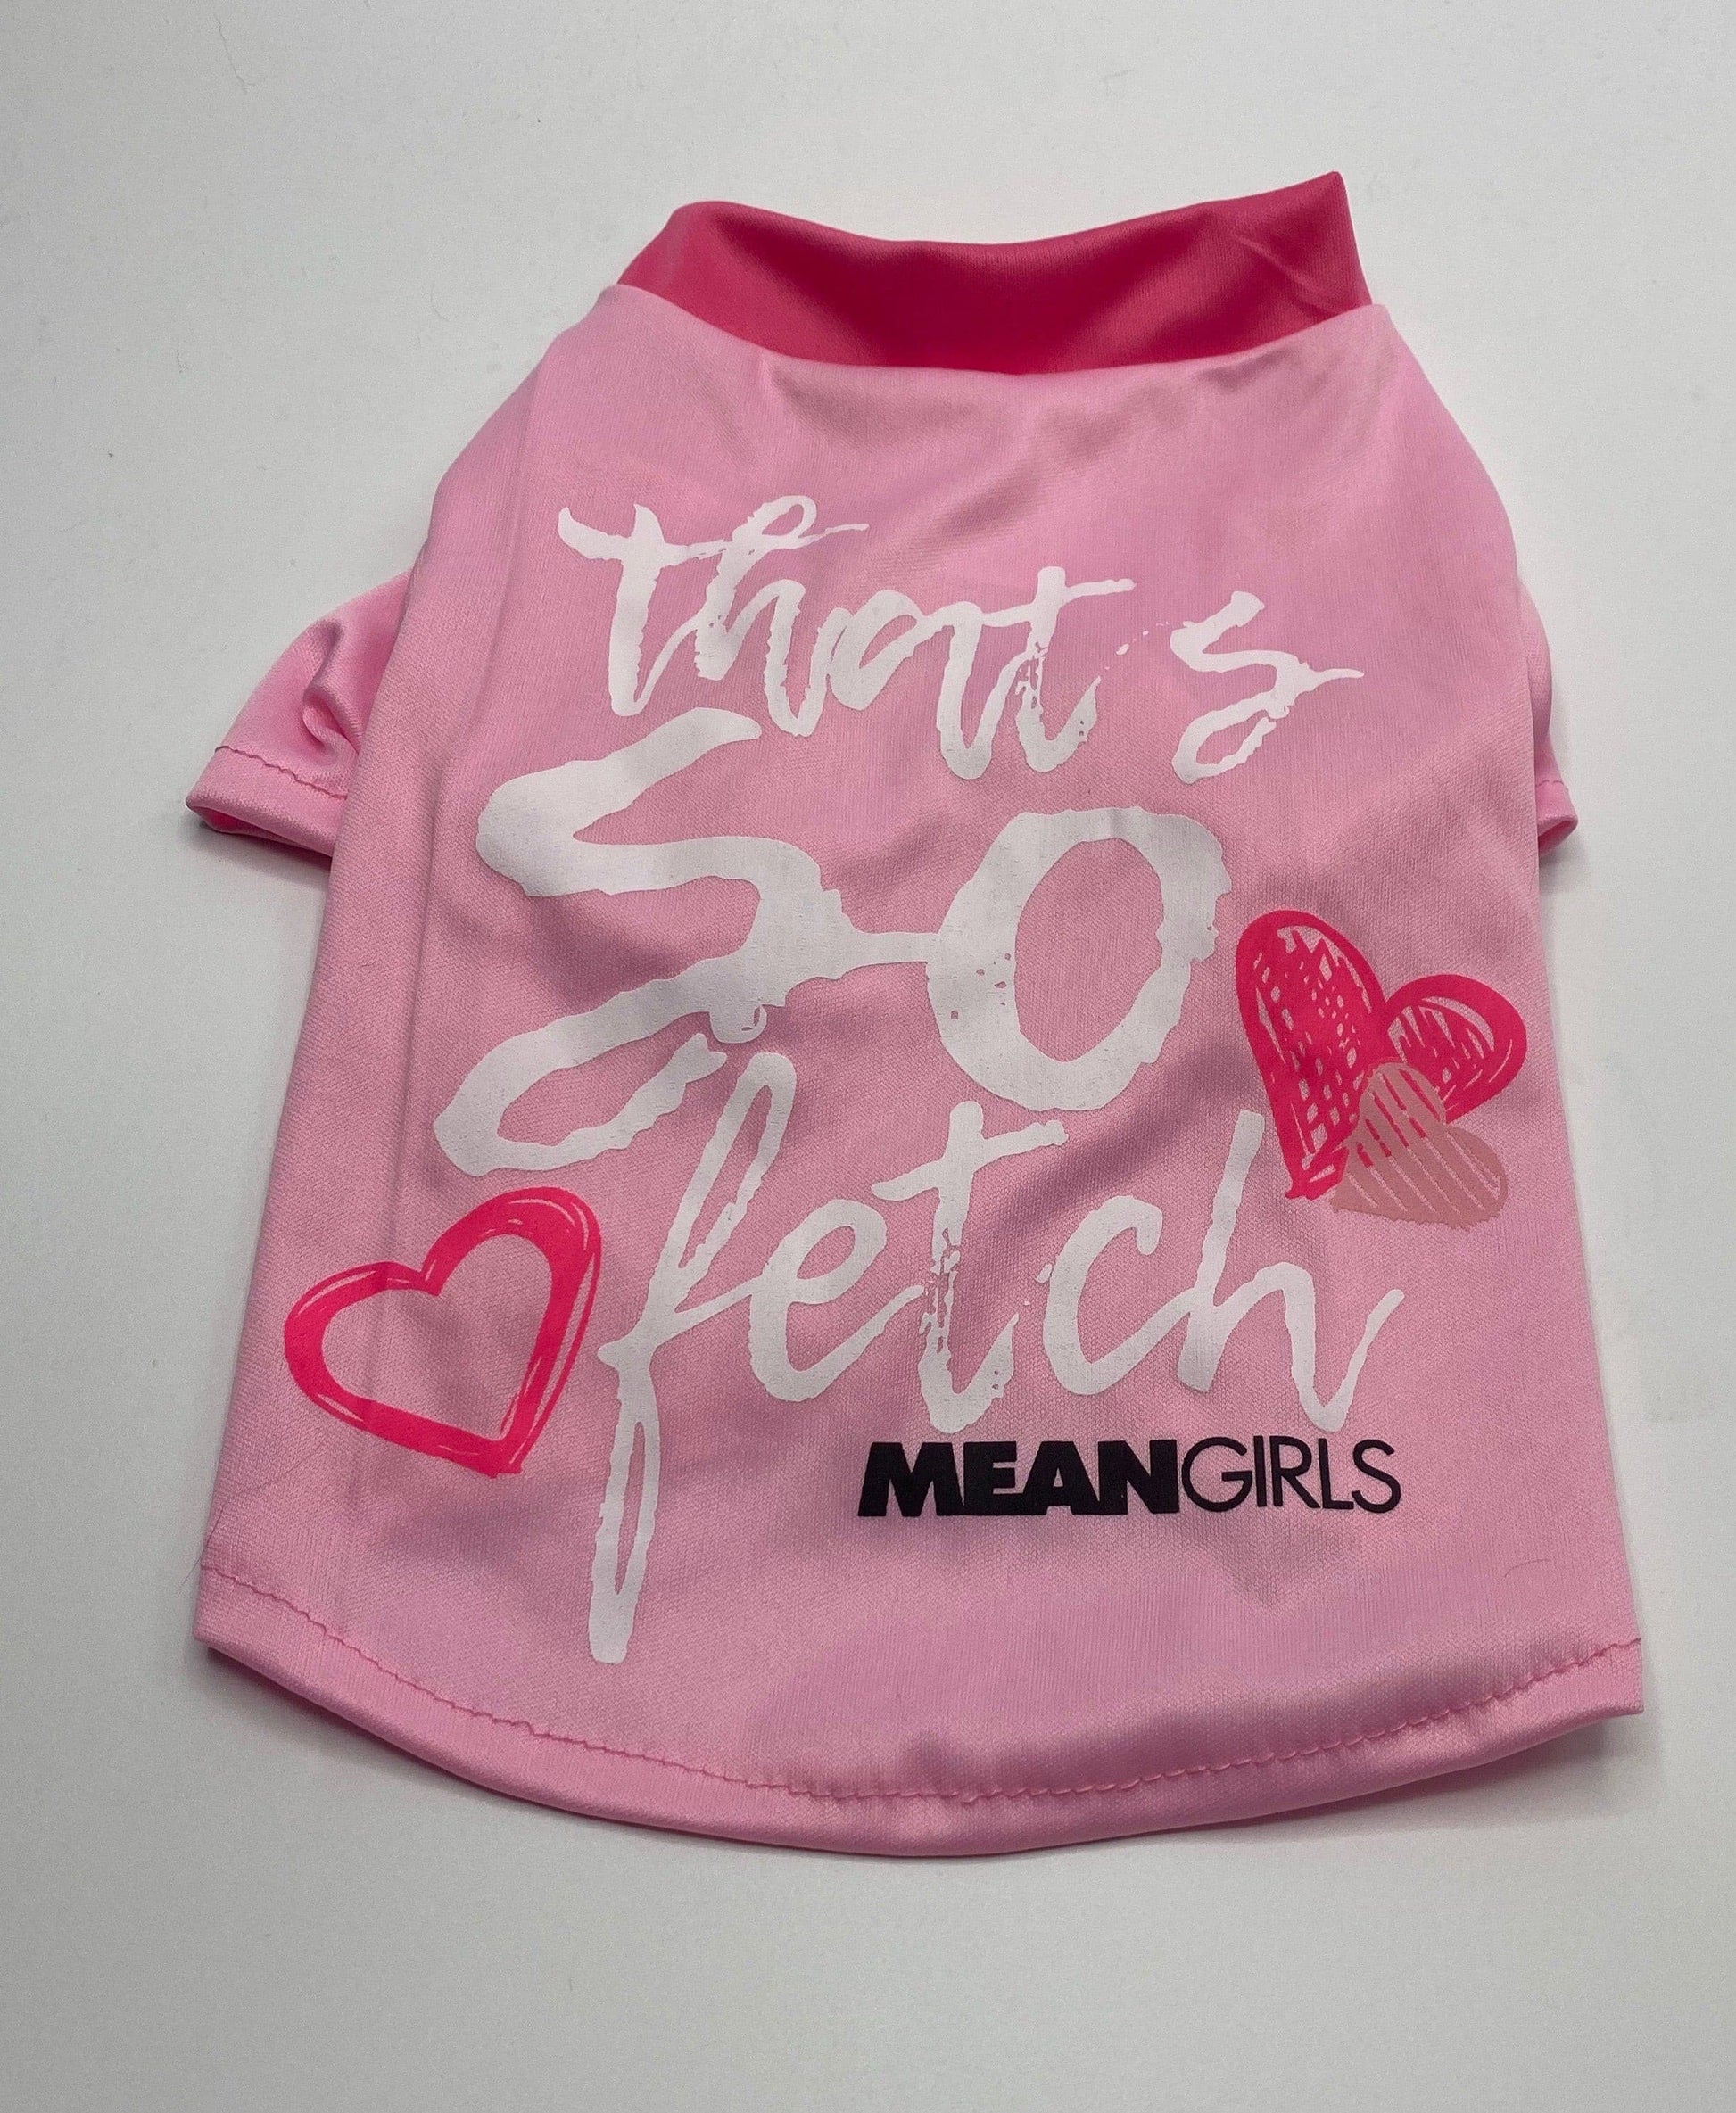 Mean Girls "So Fetch" Tee.